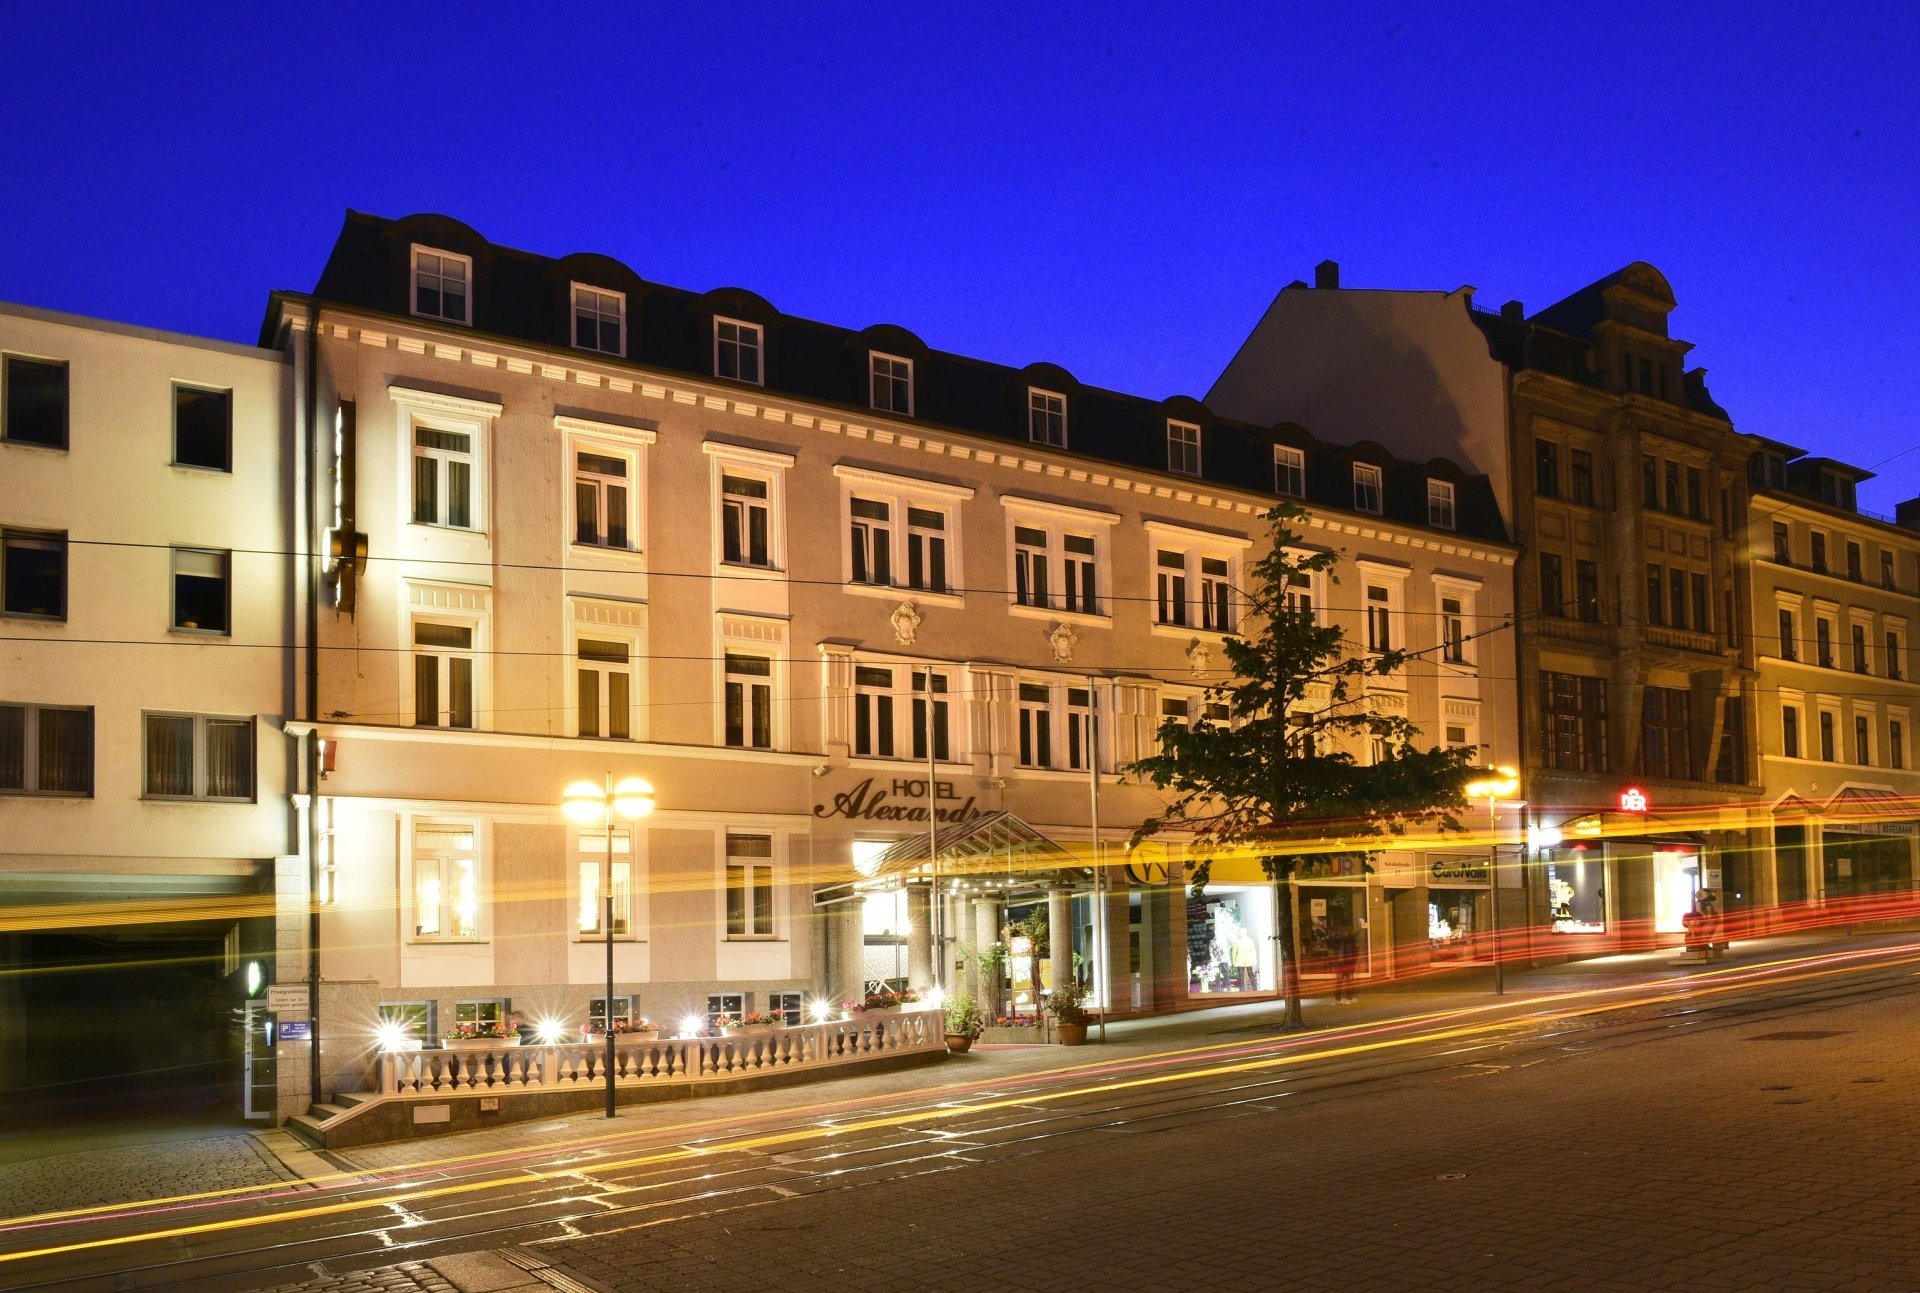 2 Tage Genusszauber® – Hotel Alexandra (4 Sterne) in Plauen, Sachsen inkl. Halbpension